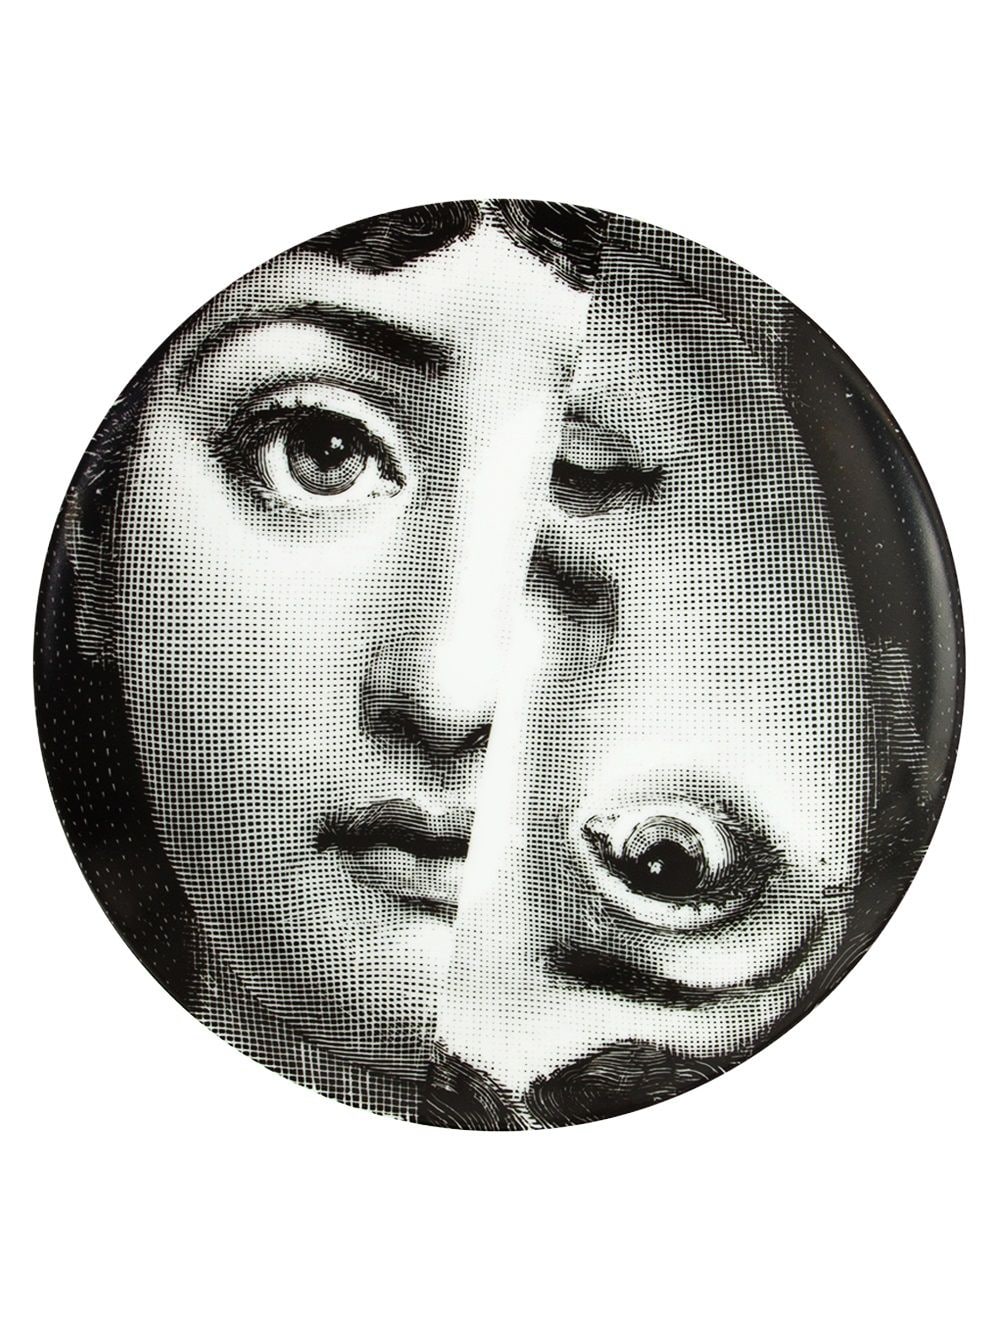 Fornasetti Faces Print Plate - Farfetch